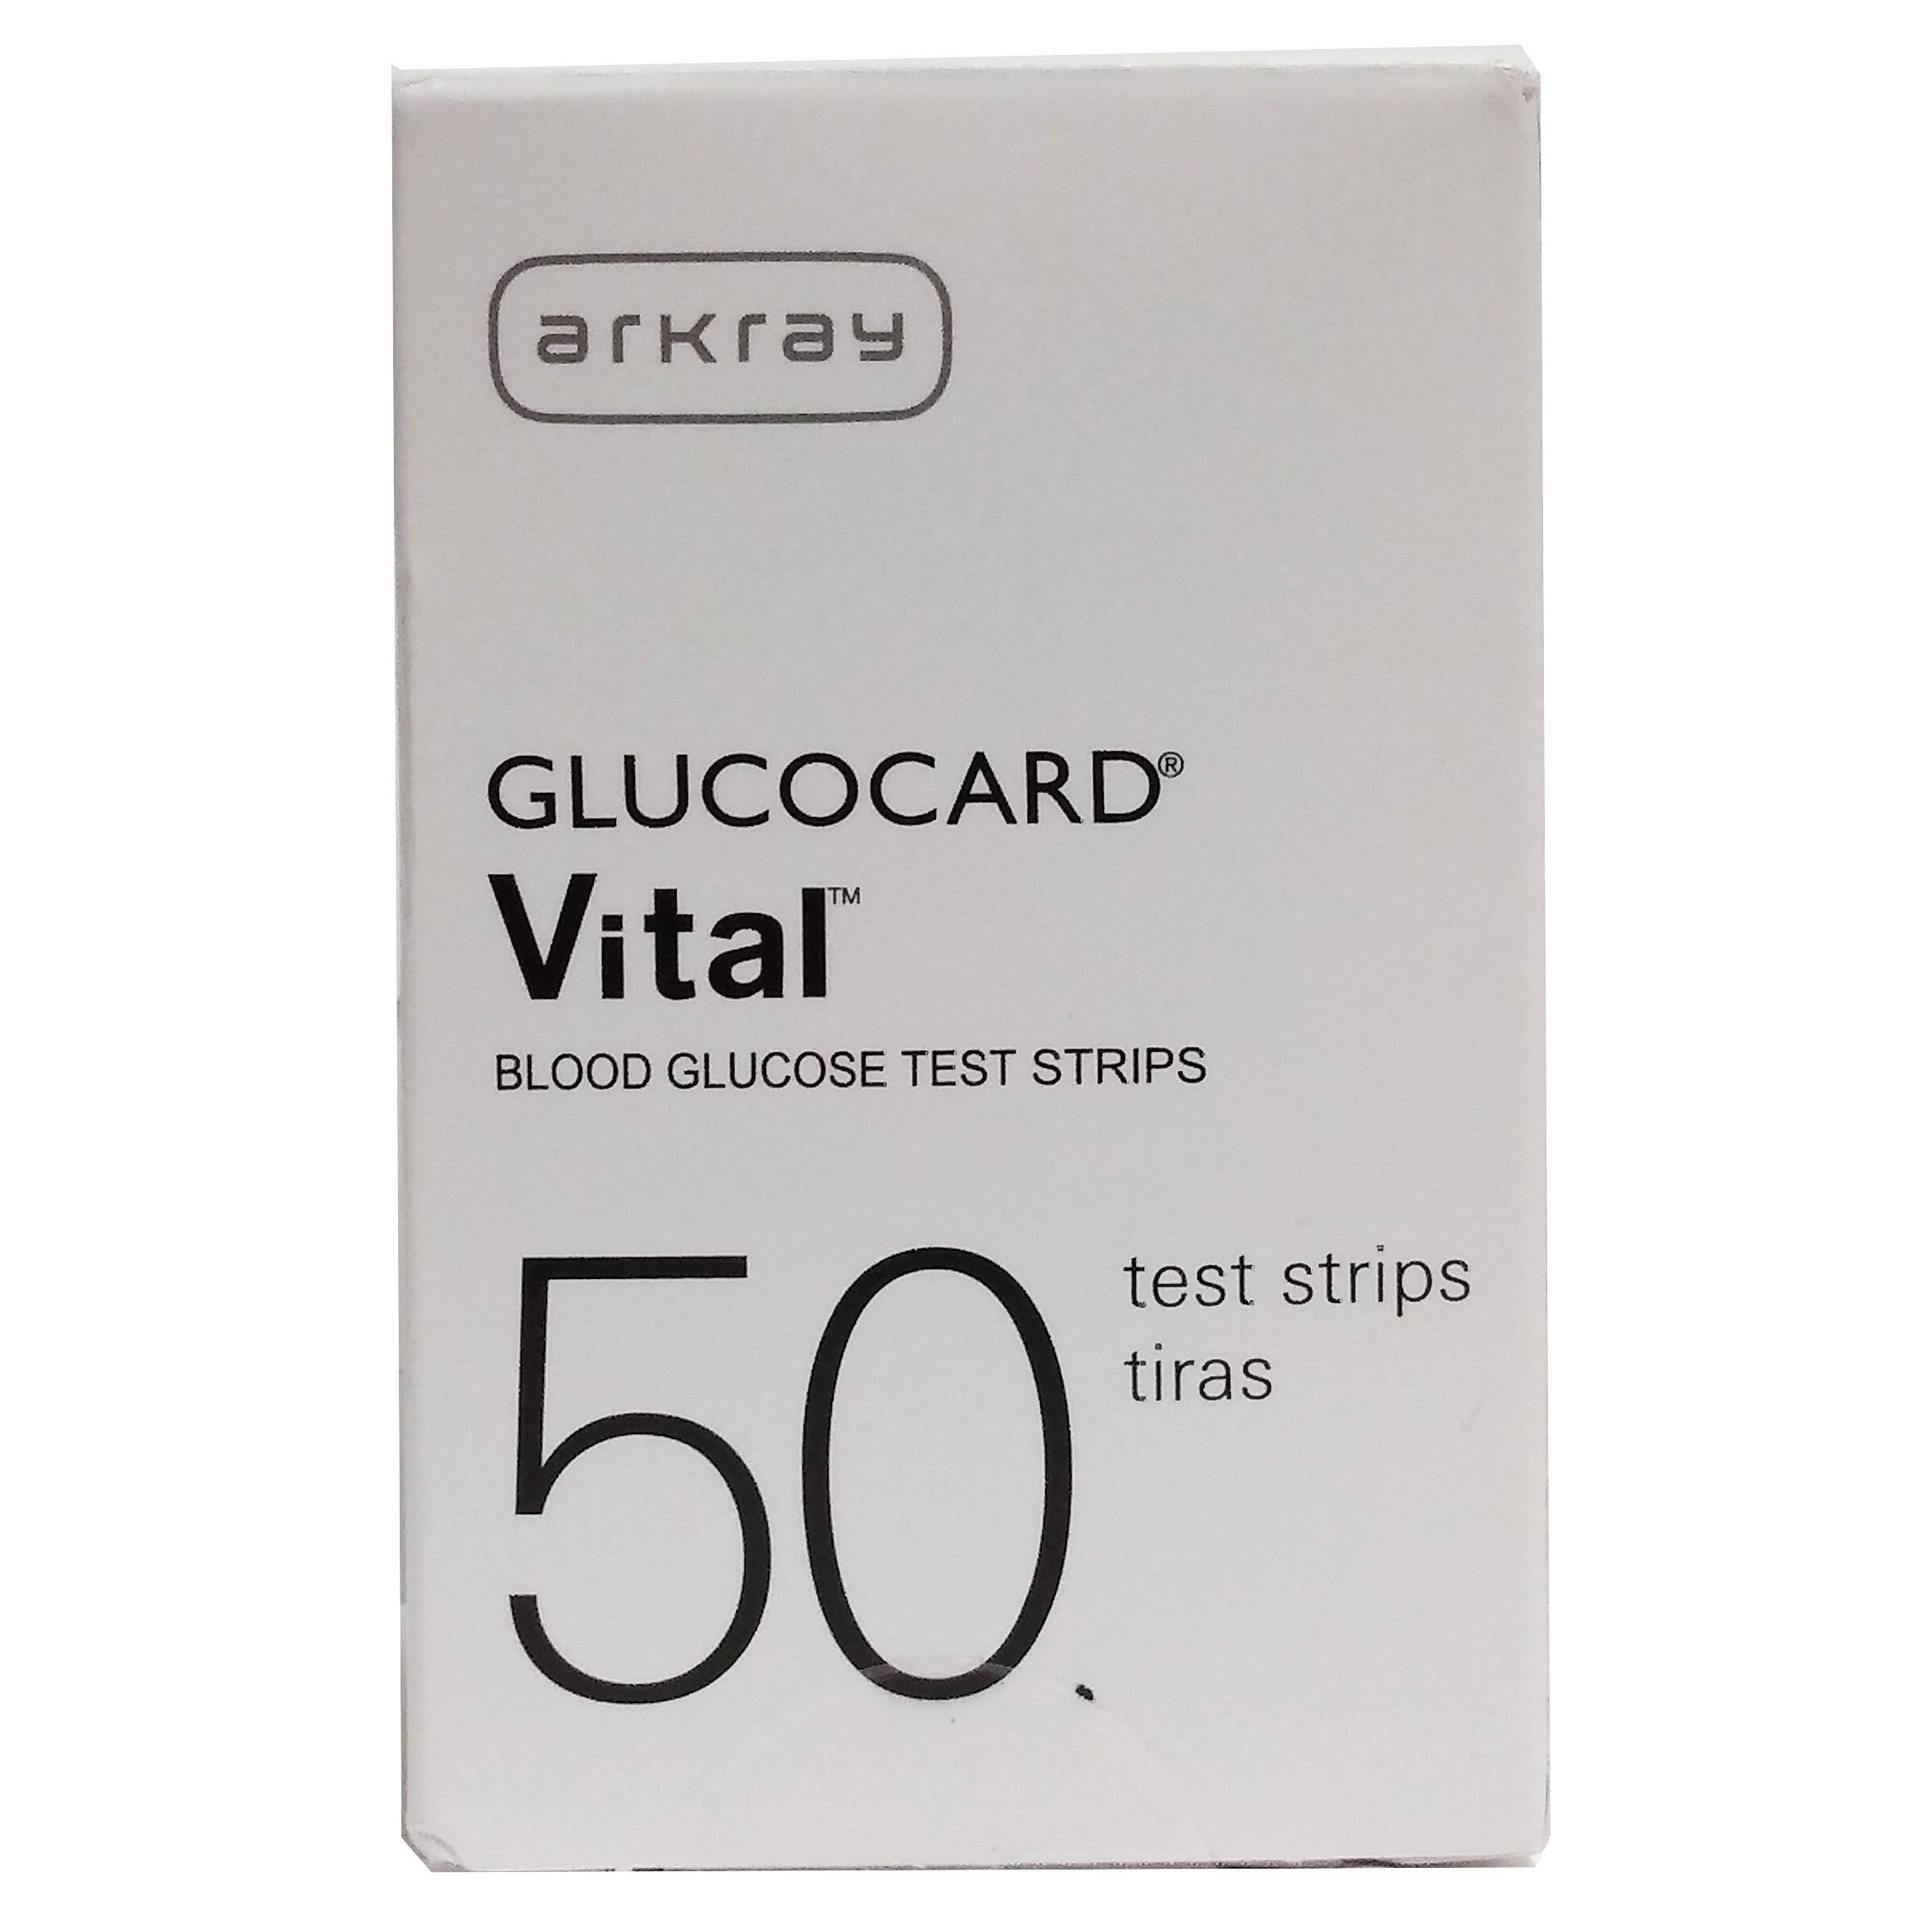 Arkray GlucoCard Vital Blood Glucose Test Strips - 50 ct